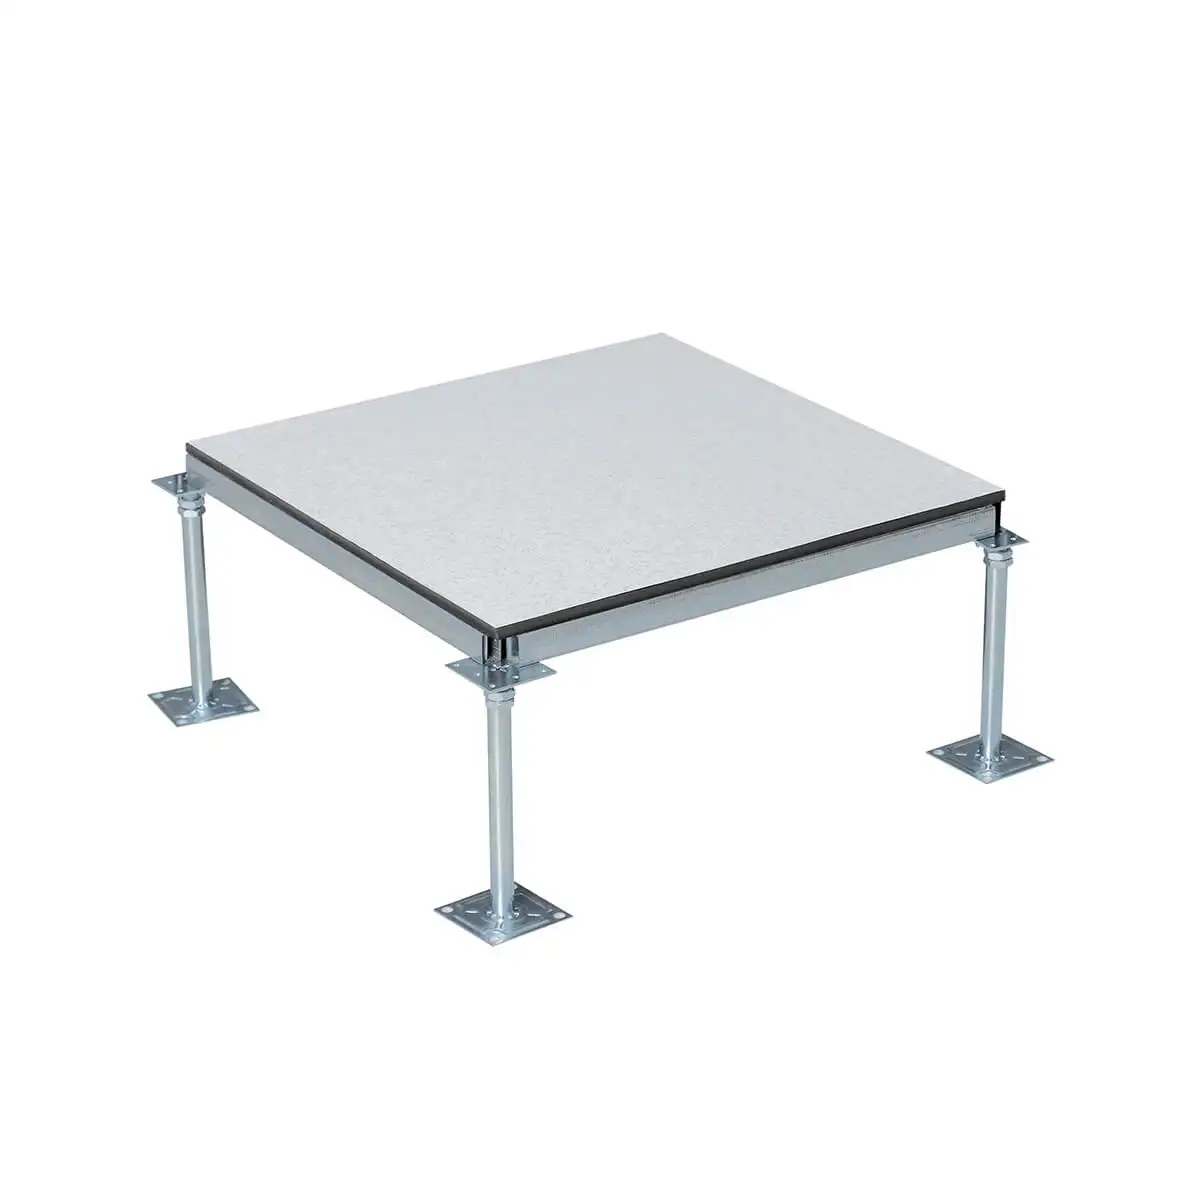 anti static floor steel cement floor for Building Material customize glass accessories raised floor in all steel